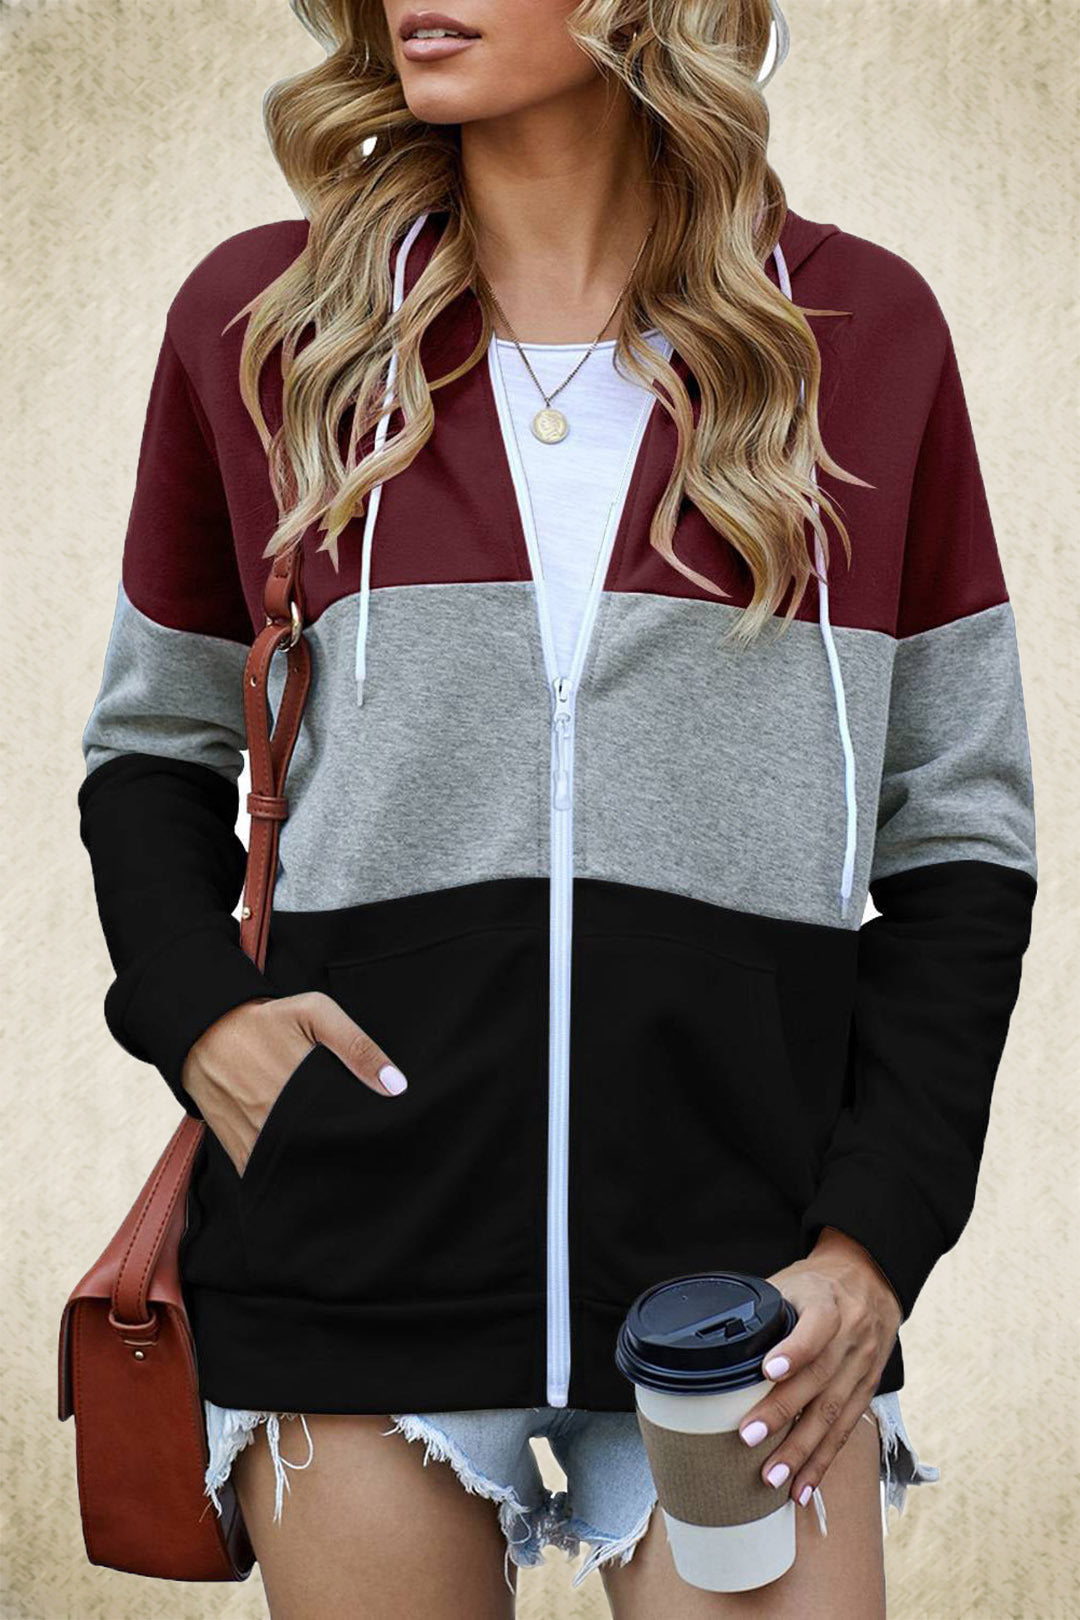 Long Sleeve Color Hooded Sweatshirt Women's Cotton Blend Zipper Pocket Cardigan Jacket